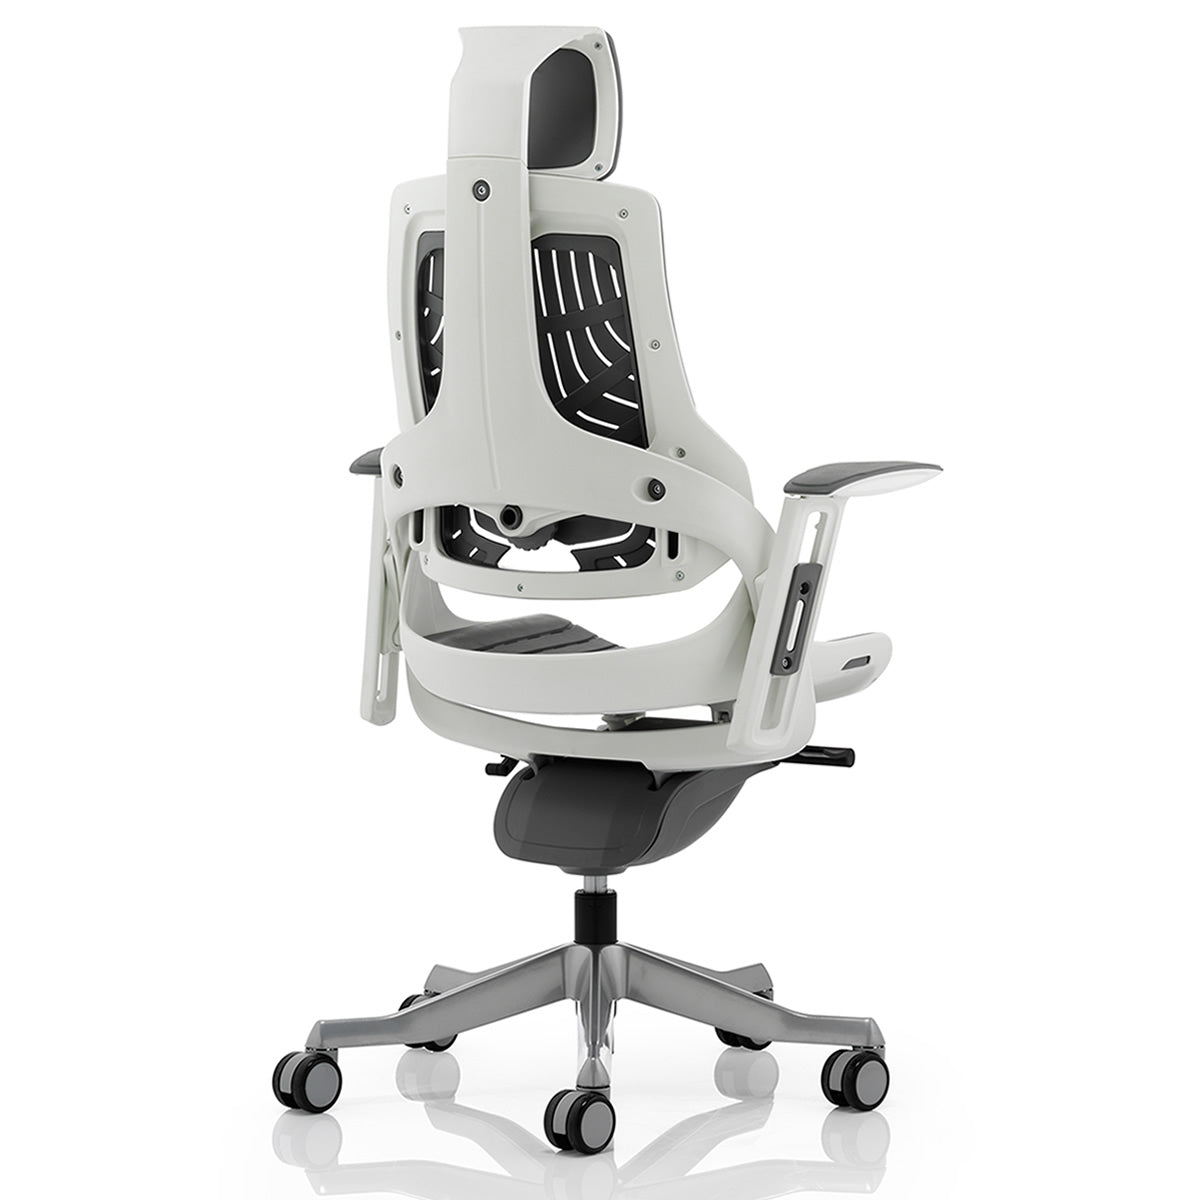 Adaptive White and Tansy Purple Ergo Chair No Headrest